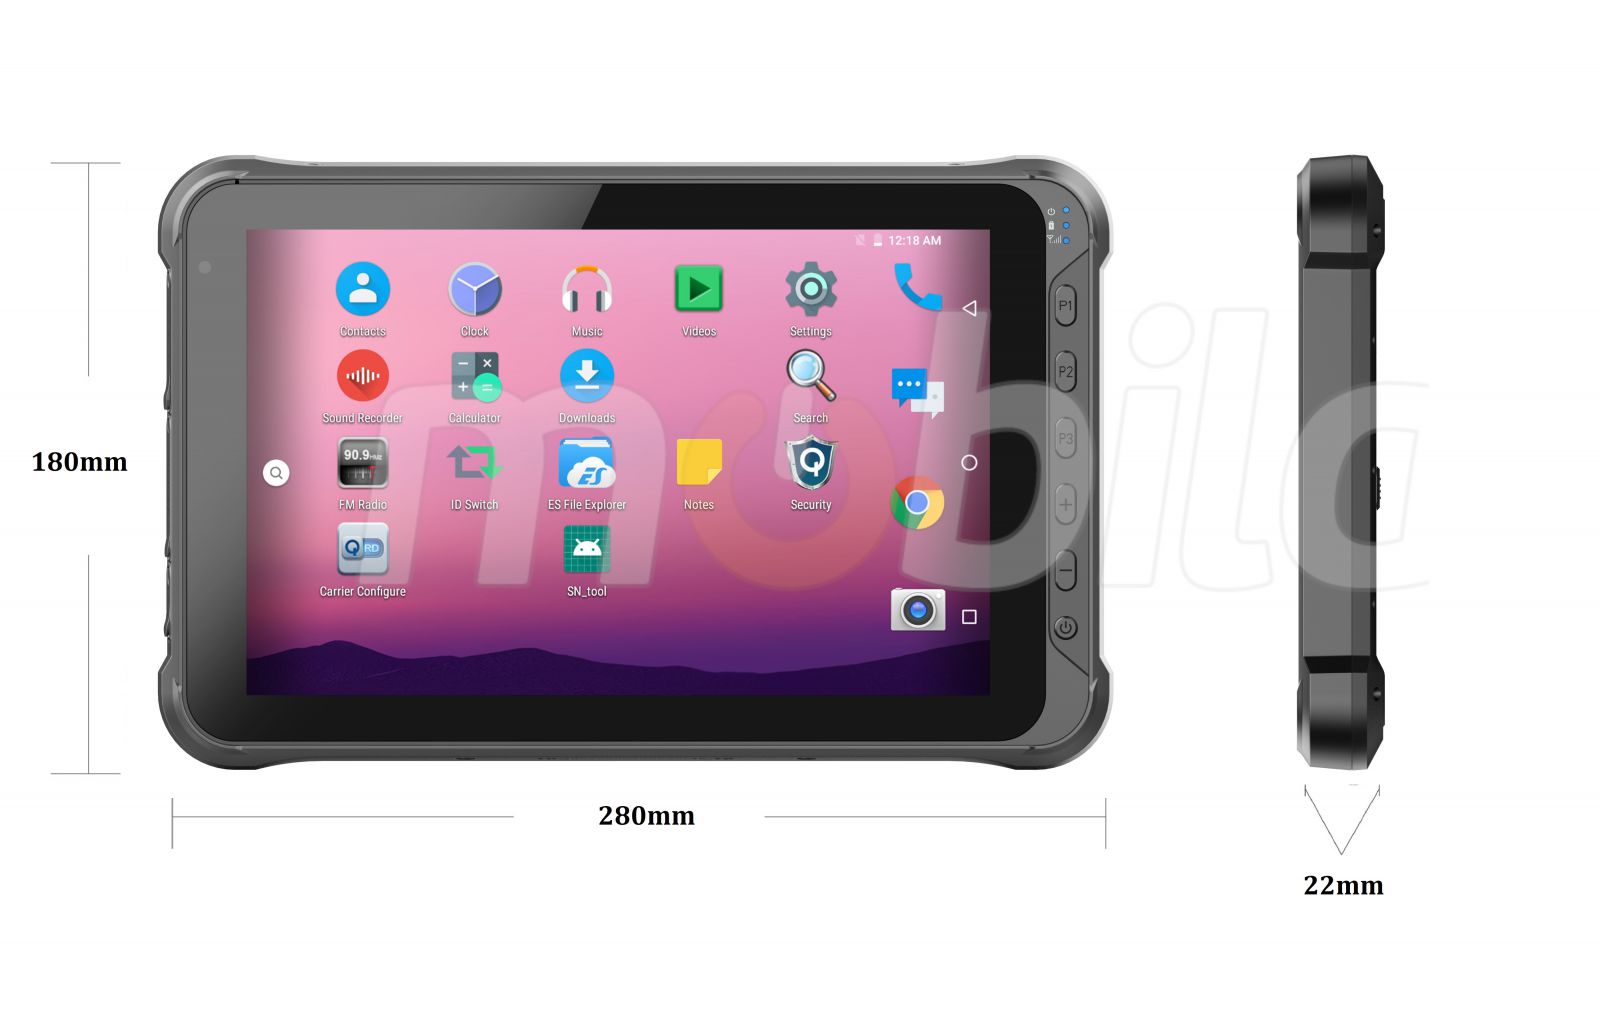 Emdoor Q15P v.5 - Drop-proof ten inch tablet with Bluetooth 4.1, 4G, 4GB RAM memory, N3680 Honeywell 2D code reader, 64GB disk and UHF scanner 